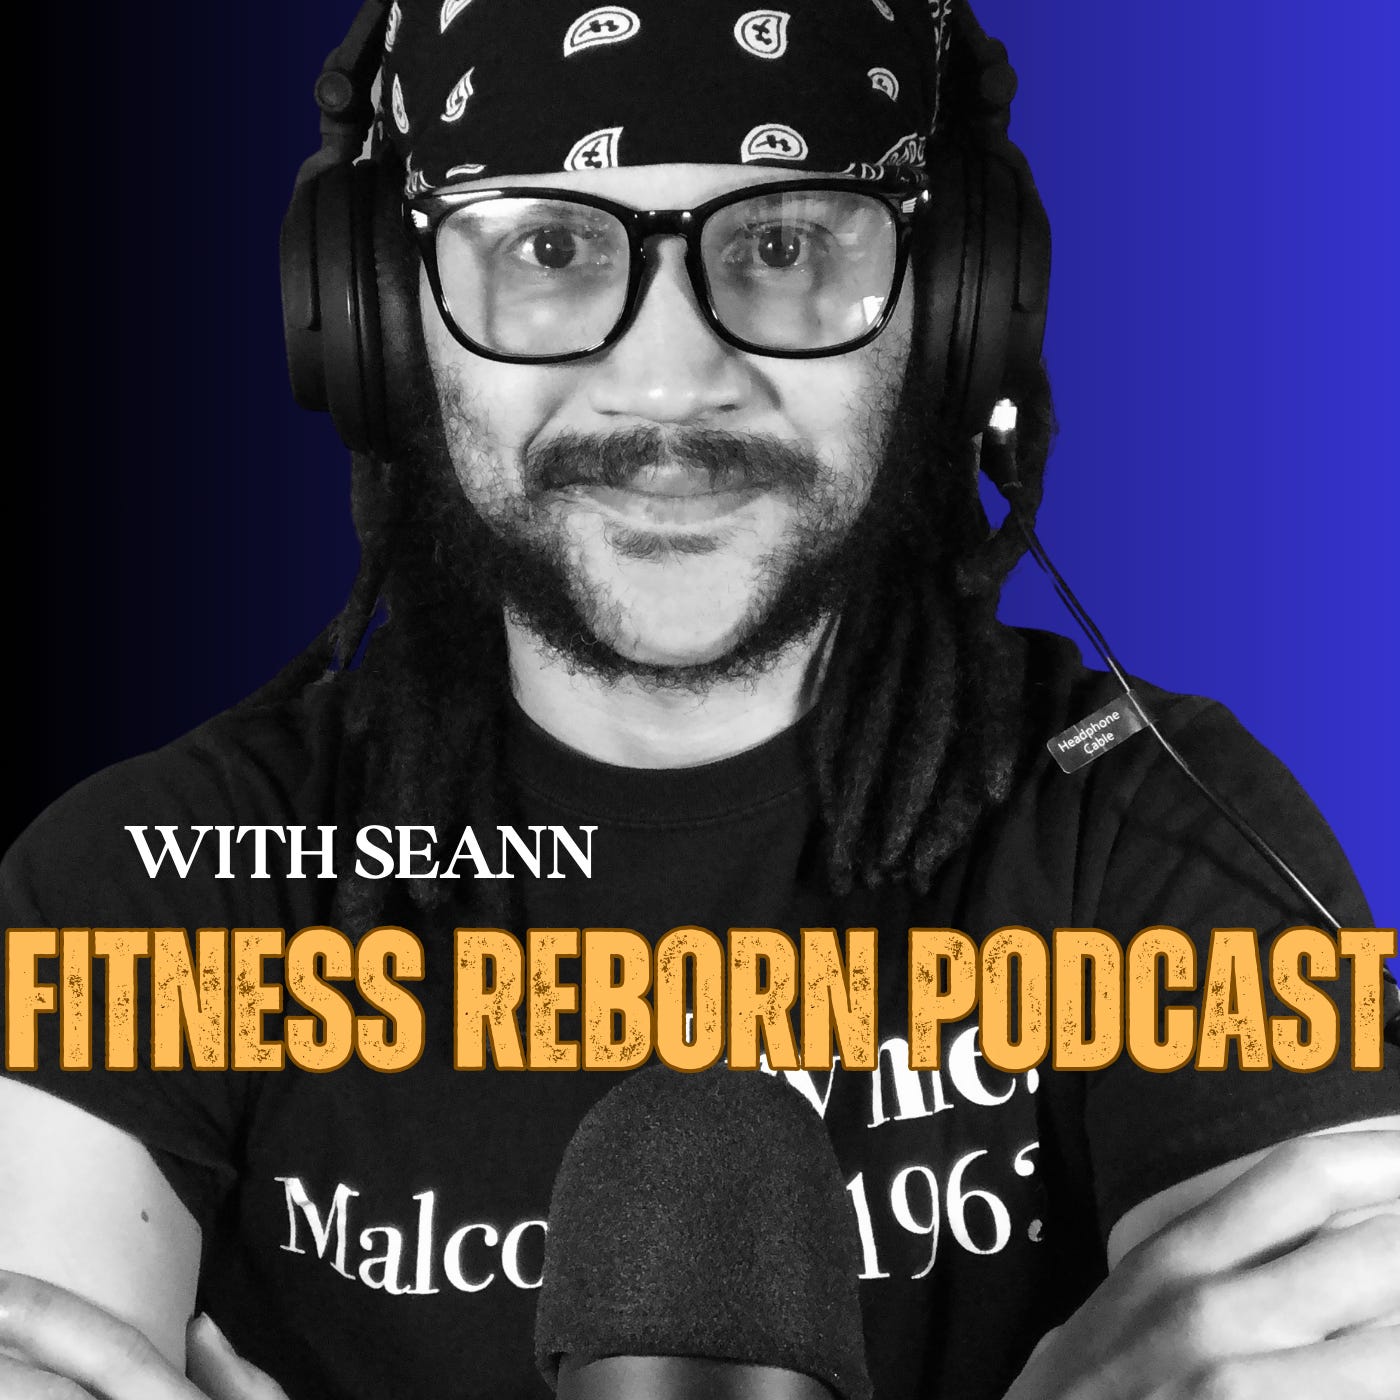 Fitness Reborn with Seann, E92: Transformation Through Discipline with Danny Cárdenas